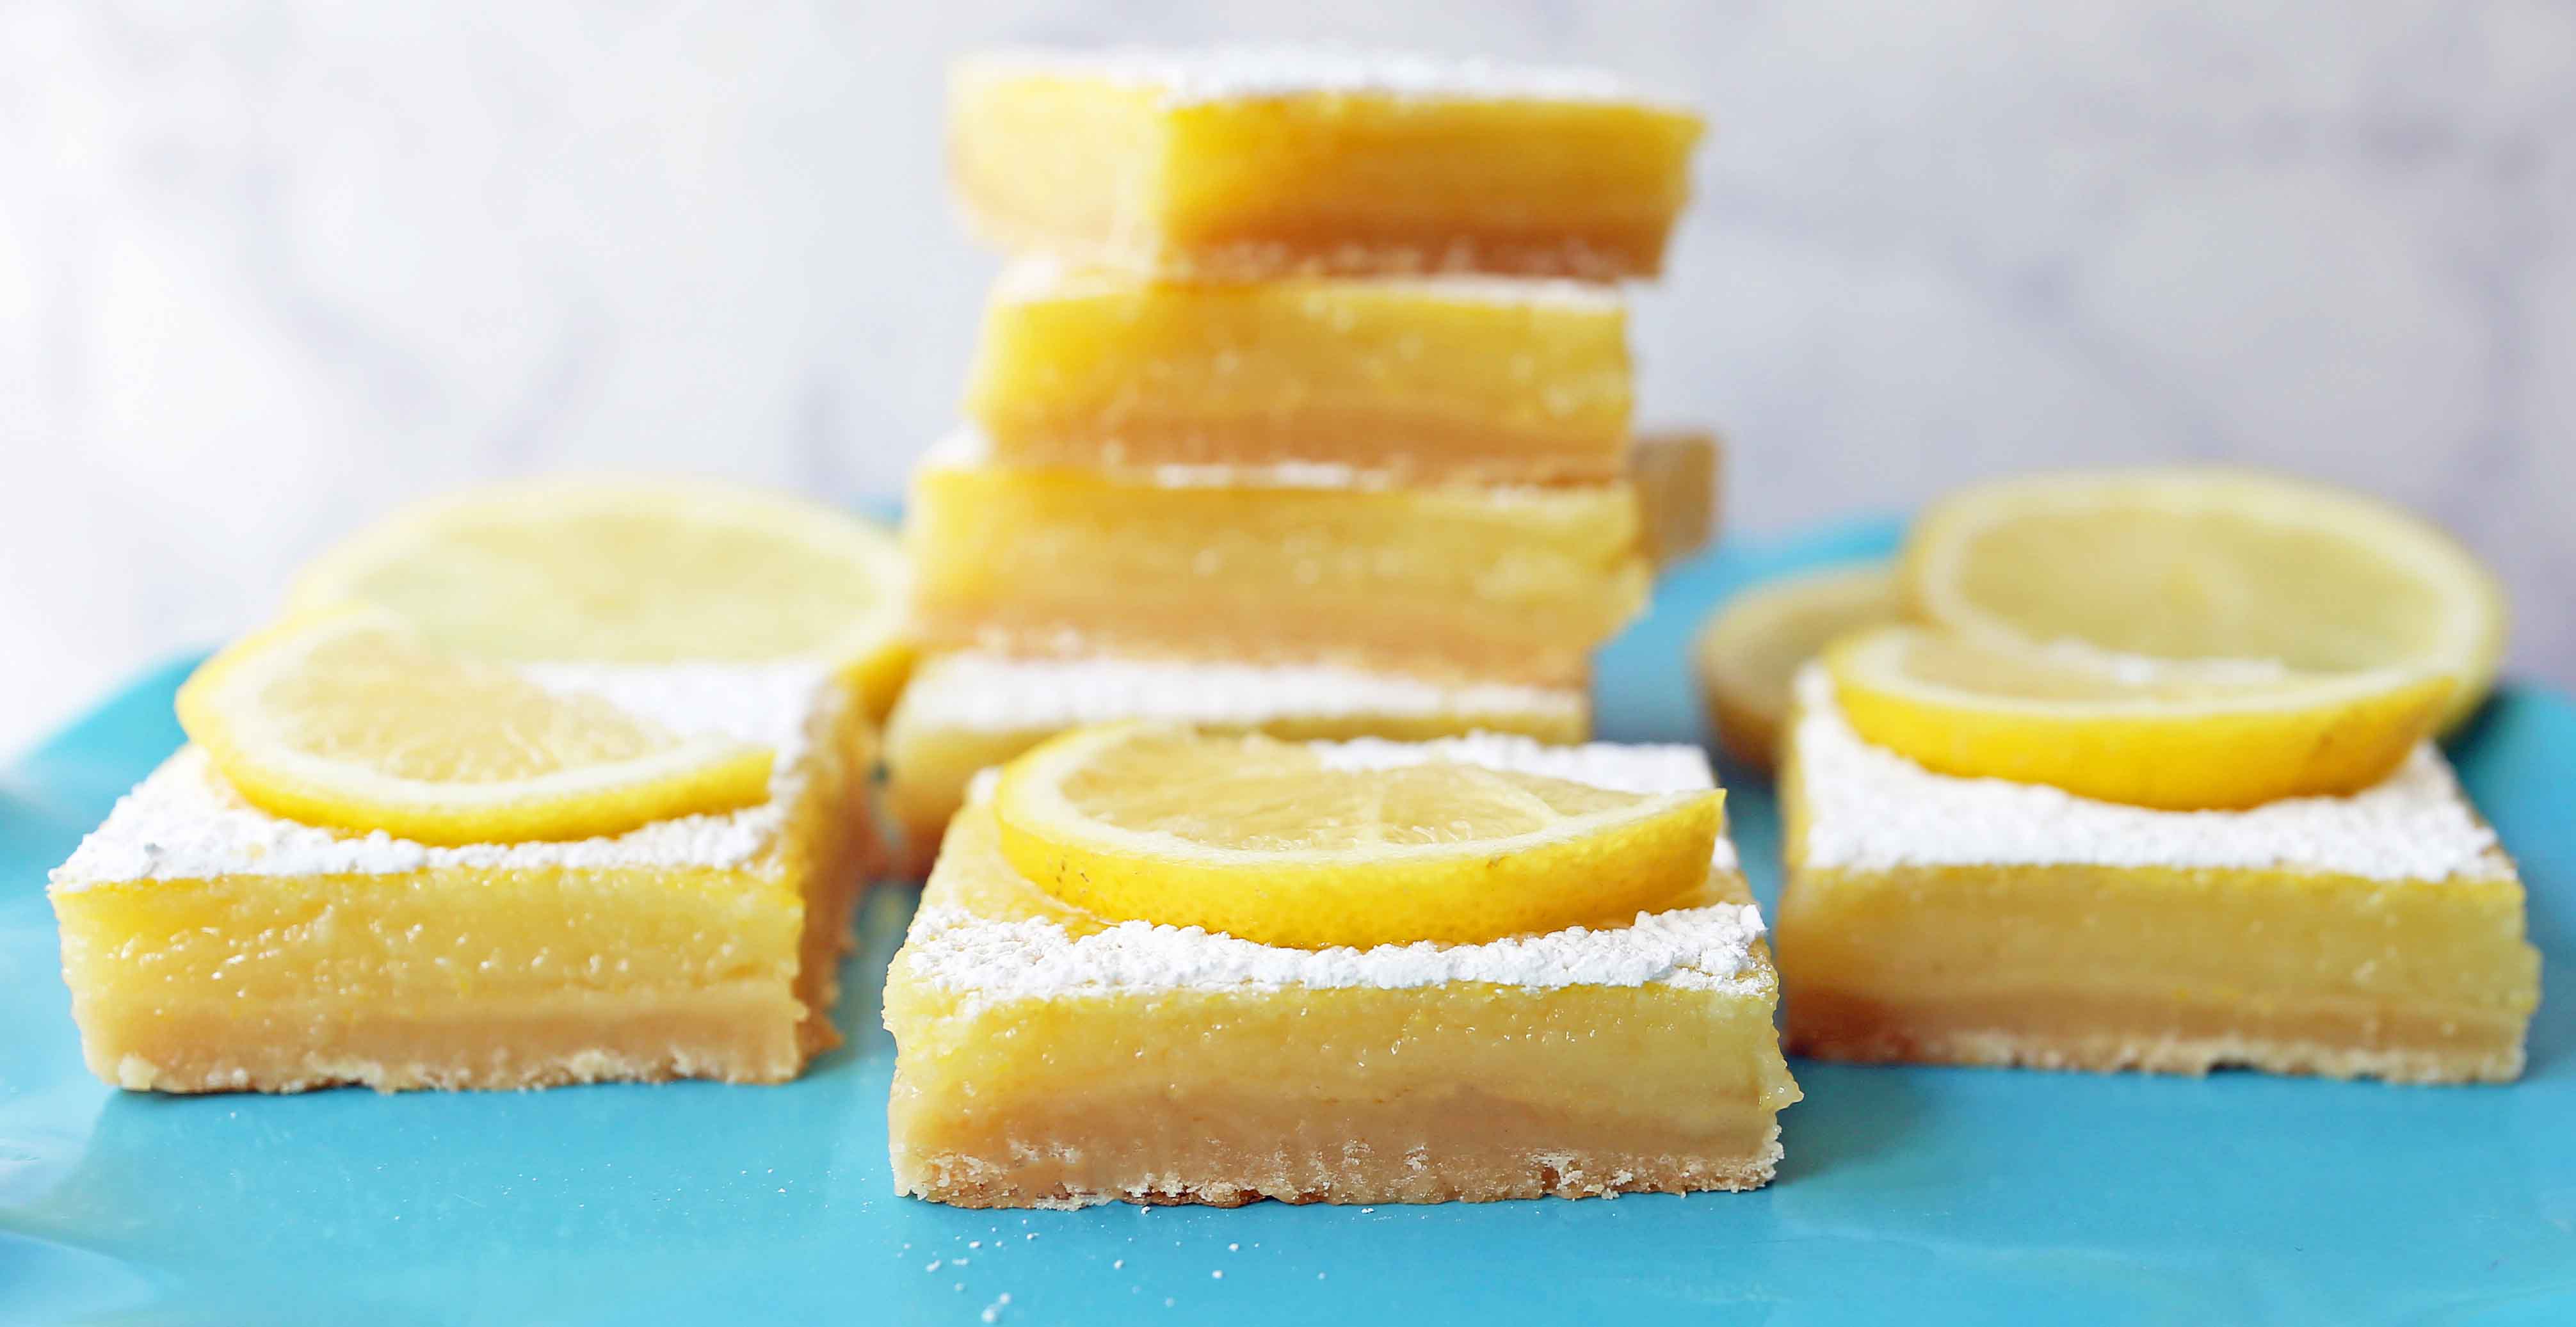 The Best Lemon Bars. Sweet and tangy lemon filling on a buttery shortbread crust. Tips and tricks for making the perfect lemon bar! www.modernhoney.com #lemonbar #lemonbars #lemondesserts #lemondessert #lemonsquare #lemonsquares